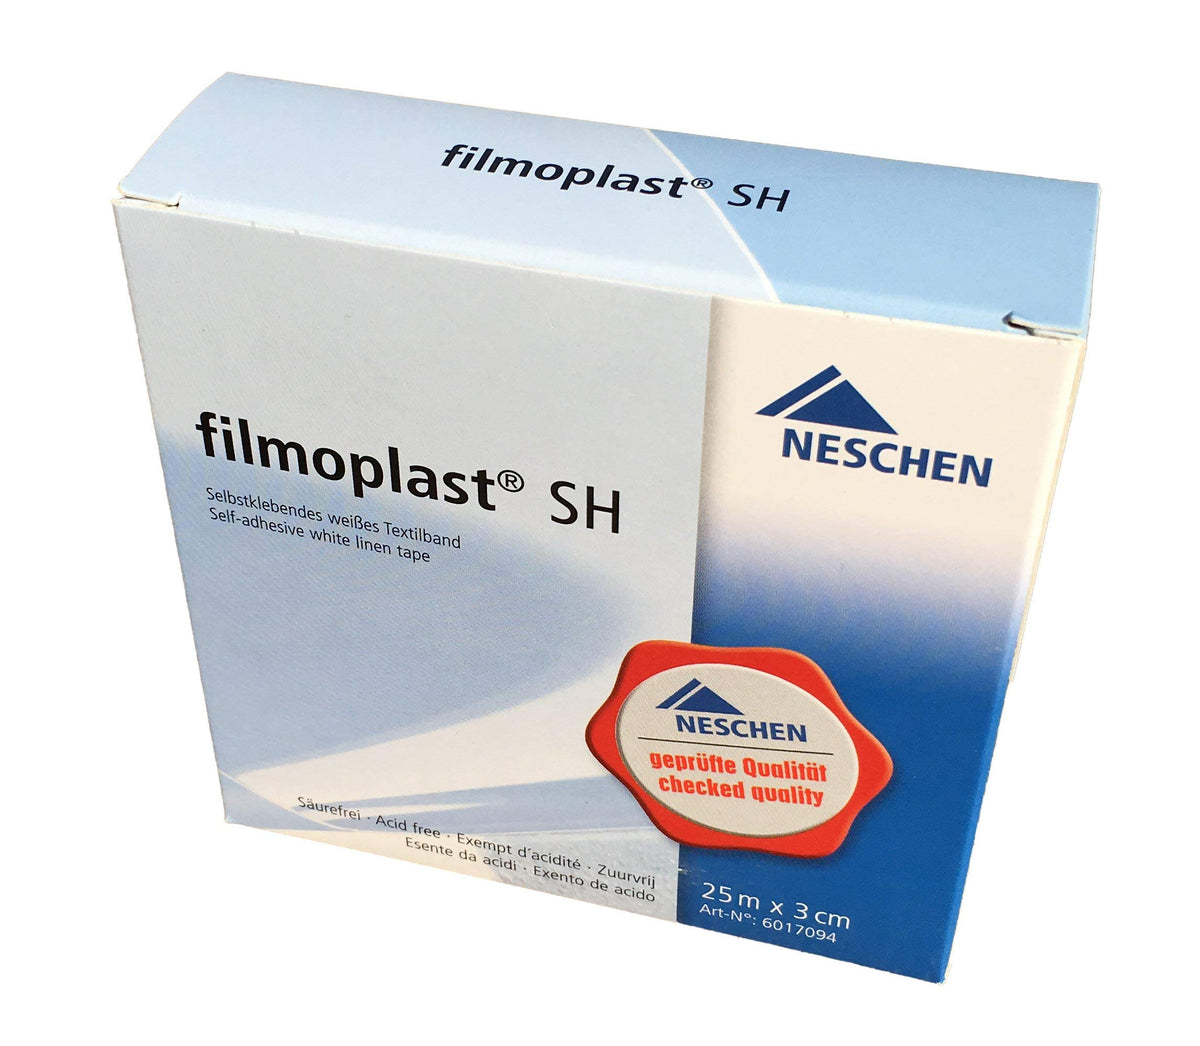 Neschen filmoplast® P90 Opaque Paper Hinging Tape (55 yds.), Tape, Conservation Supplies, Preservation